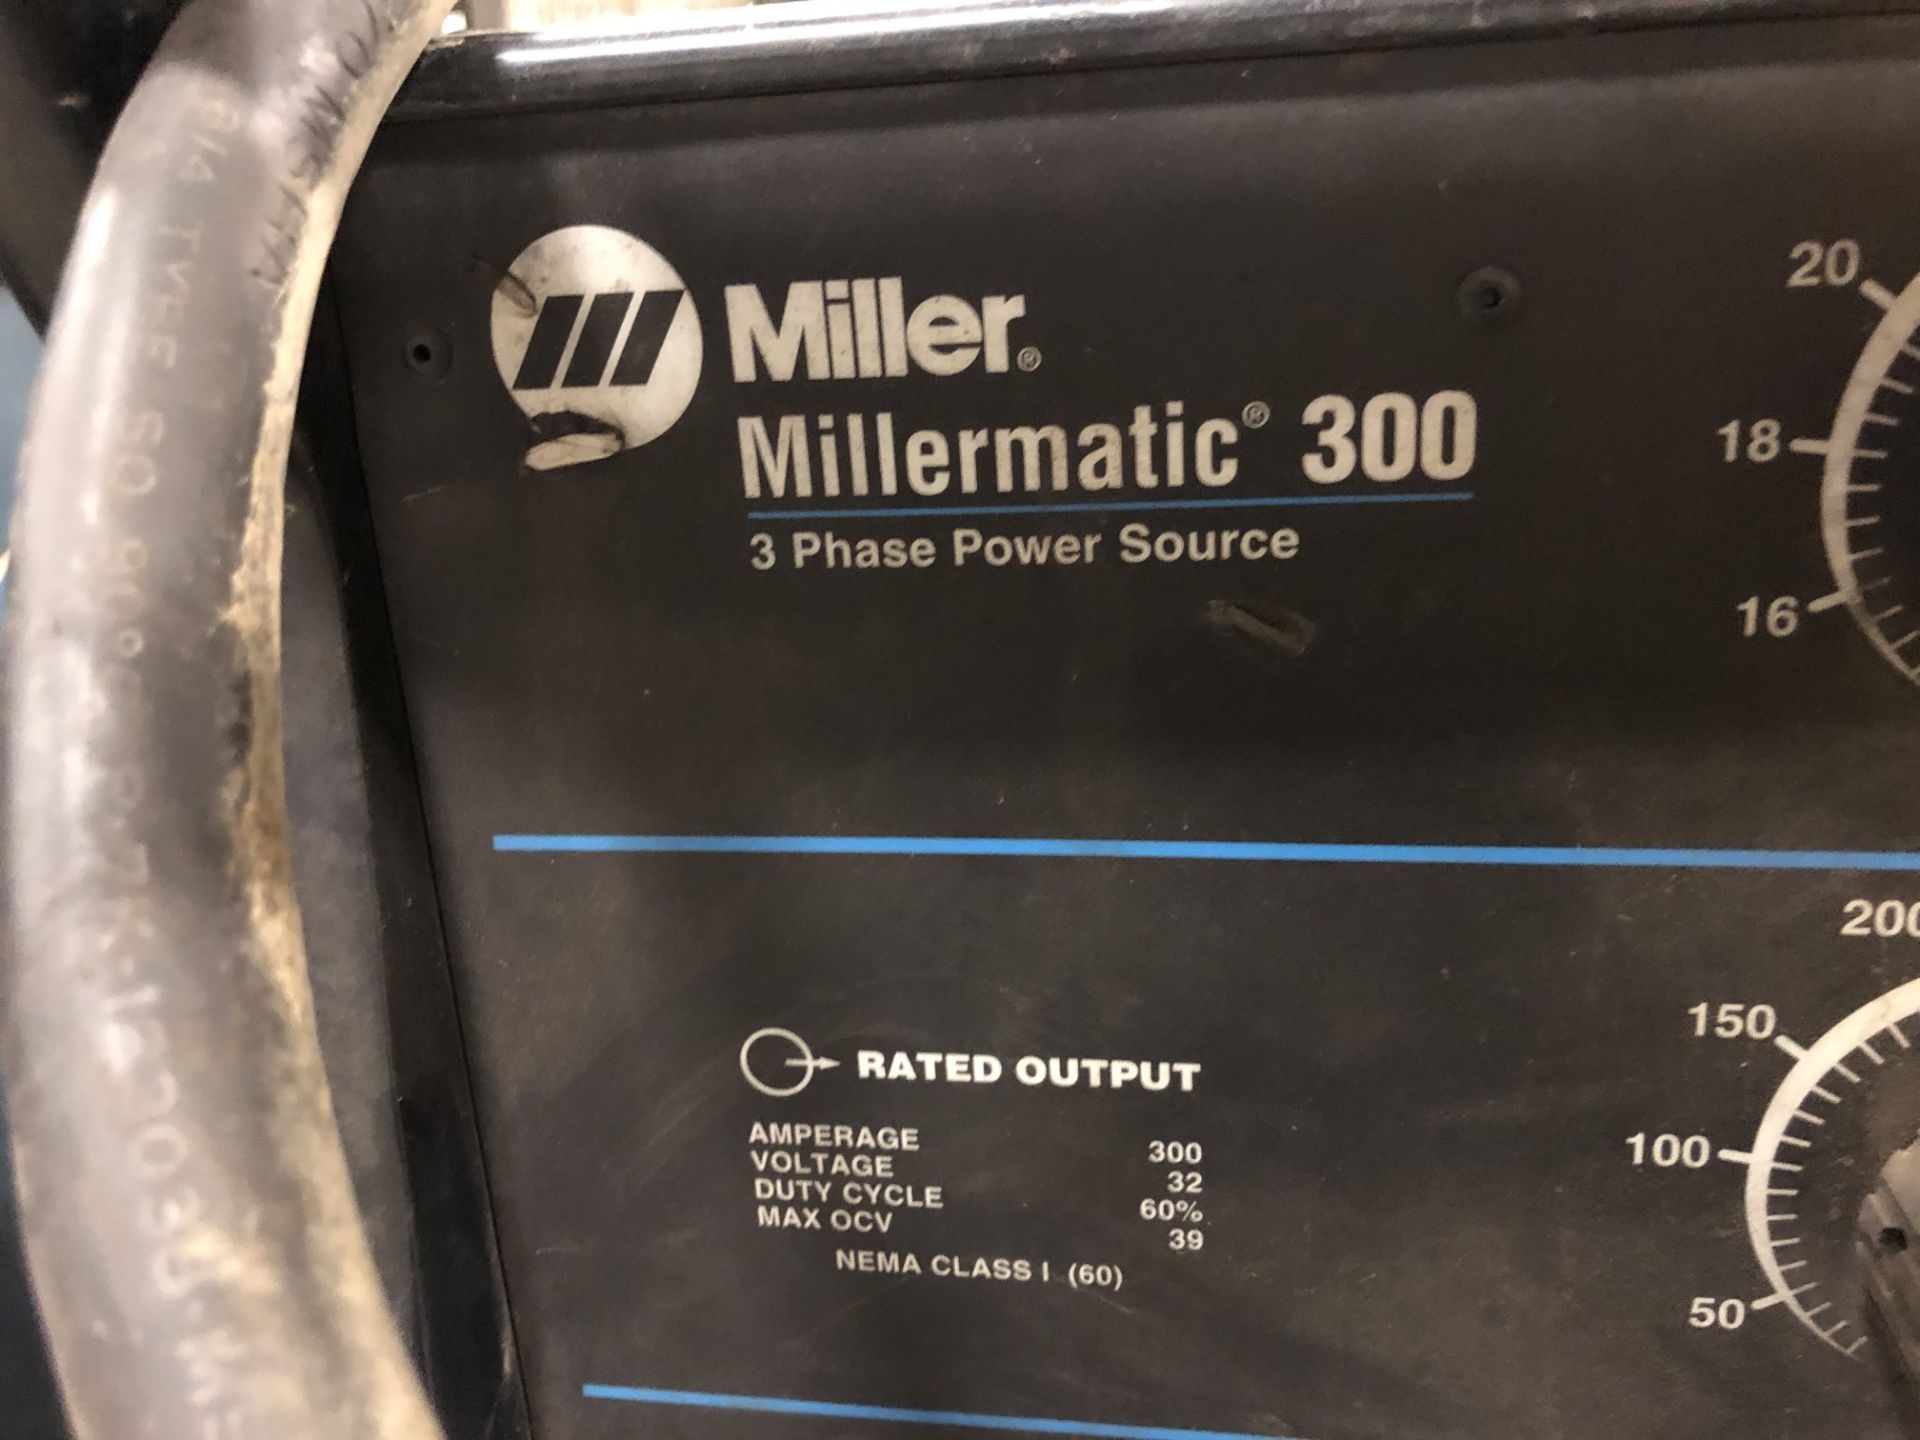 Millermatic 300 300 Amp Welder, 1997 model - Image 2 of 2